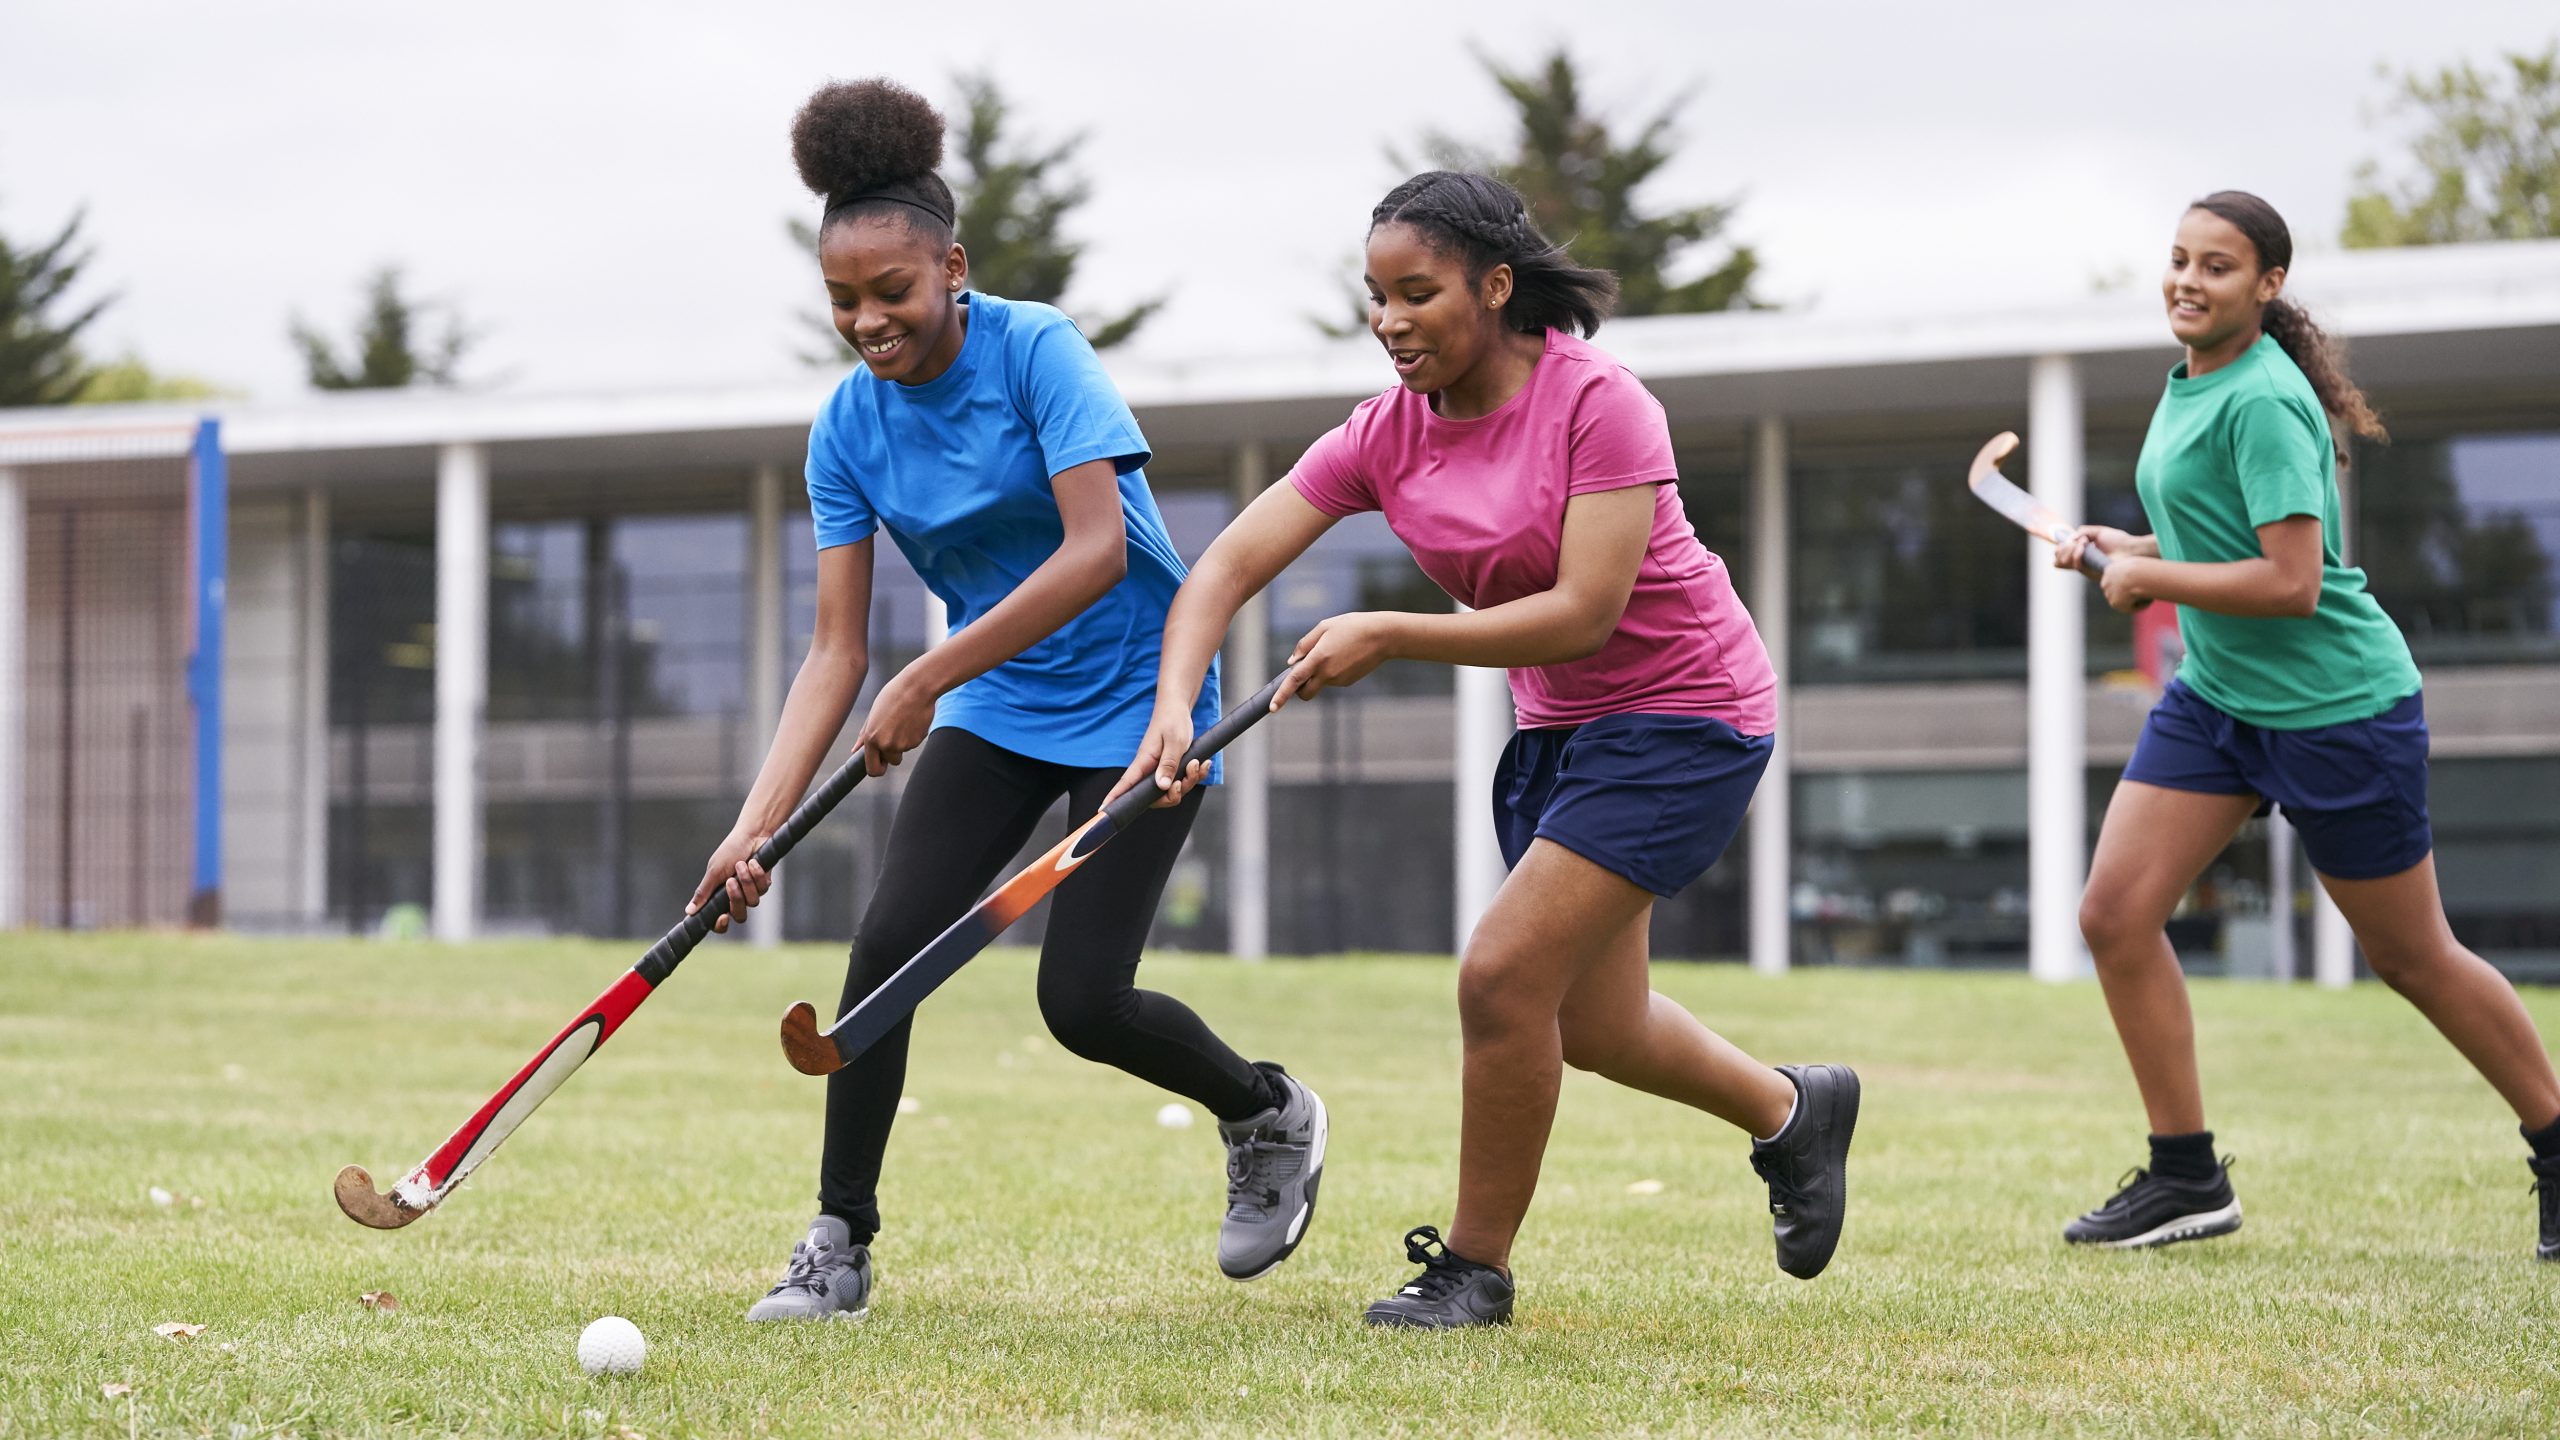 Two black teenage school girls playing hockey on grass